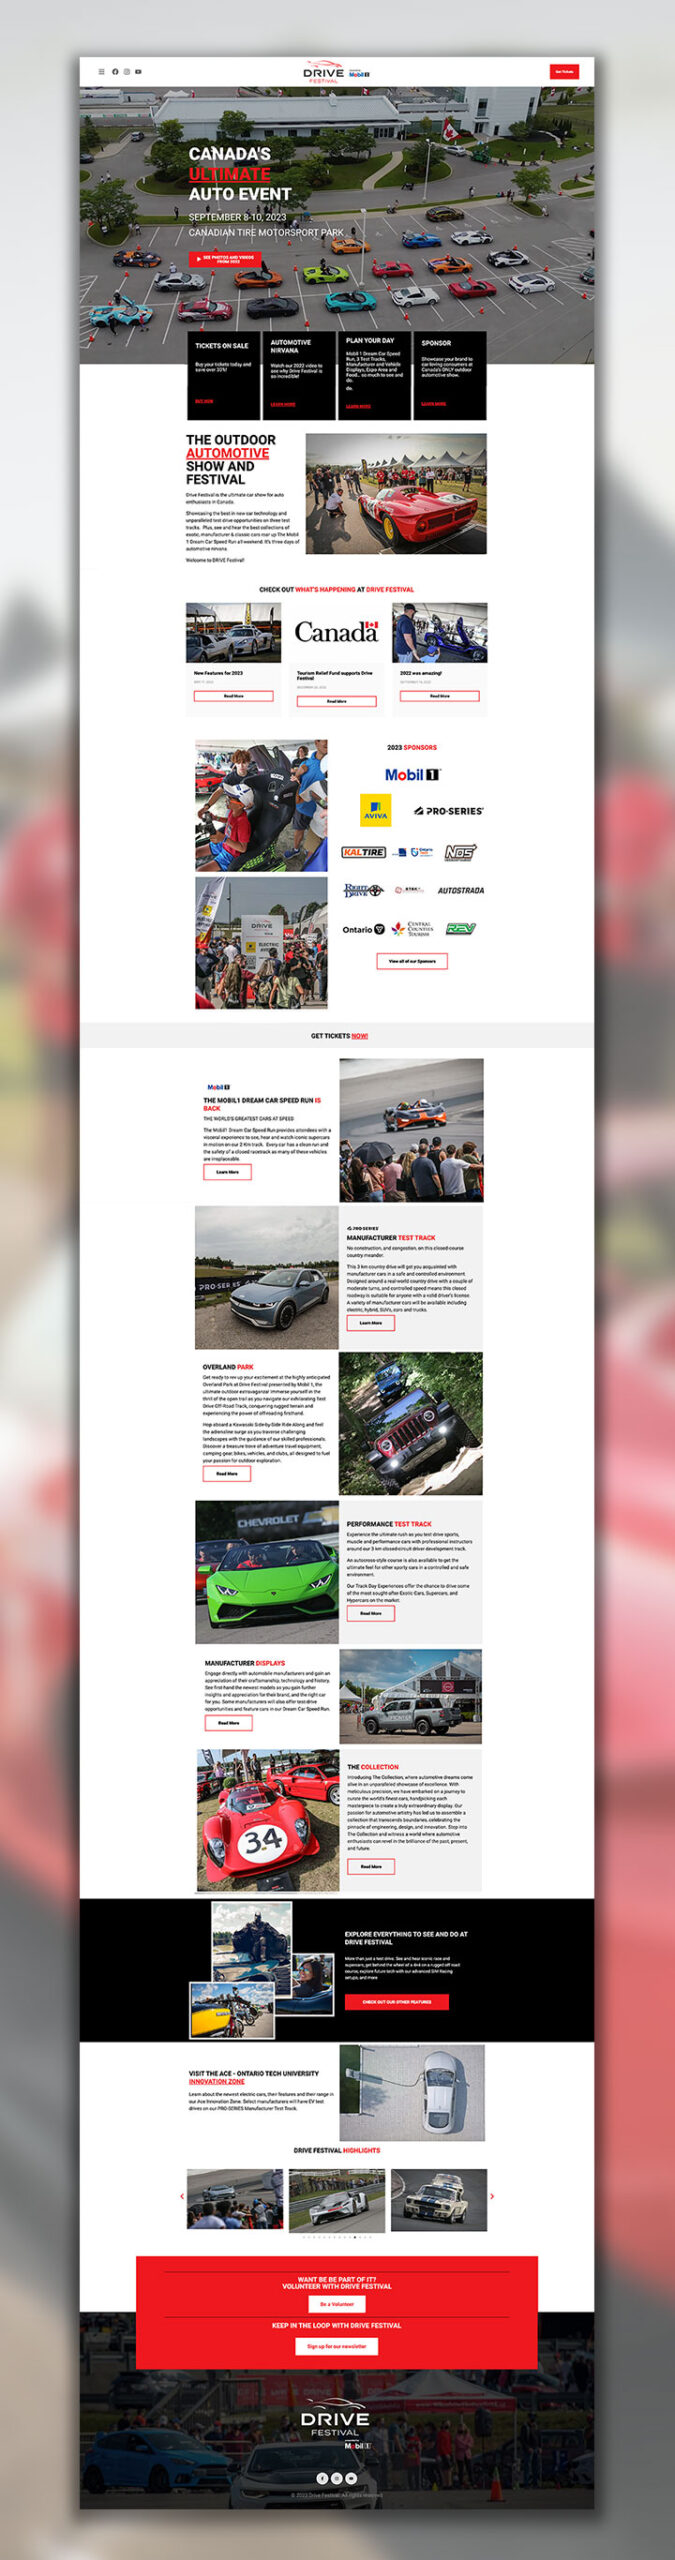 drive-fest-home-page-website-design